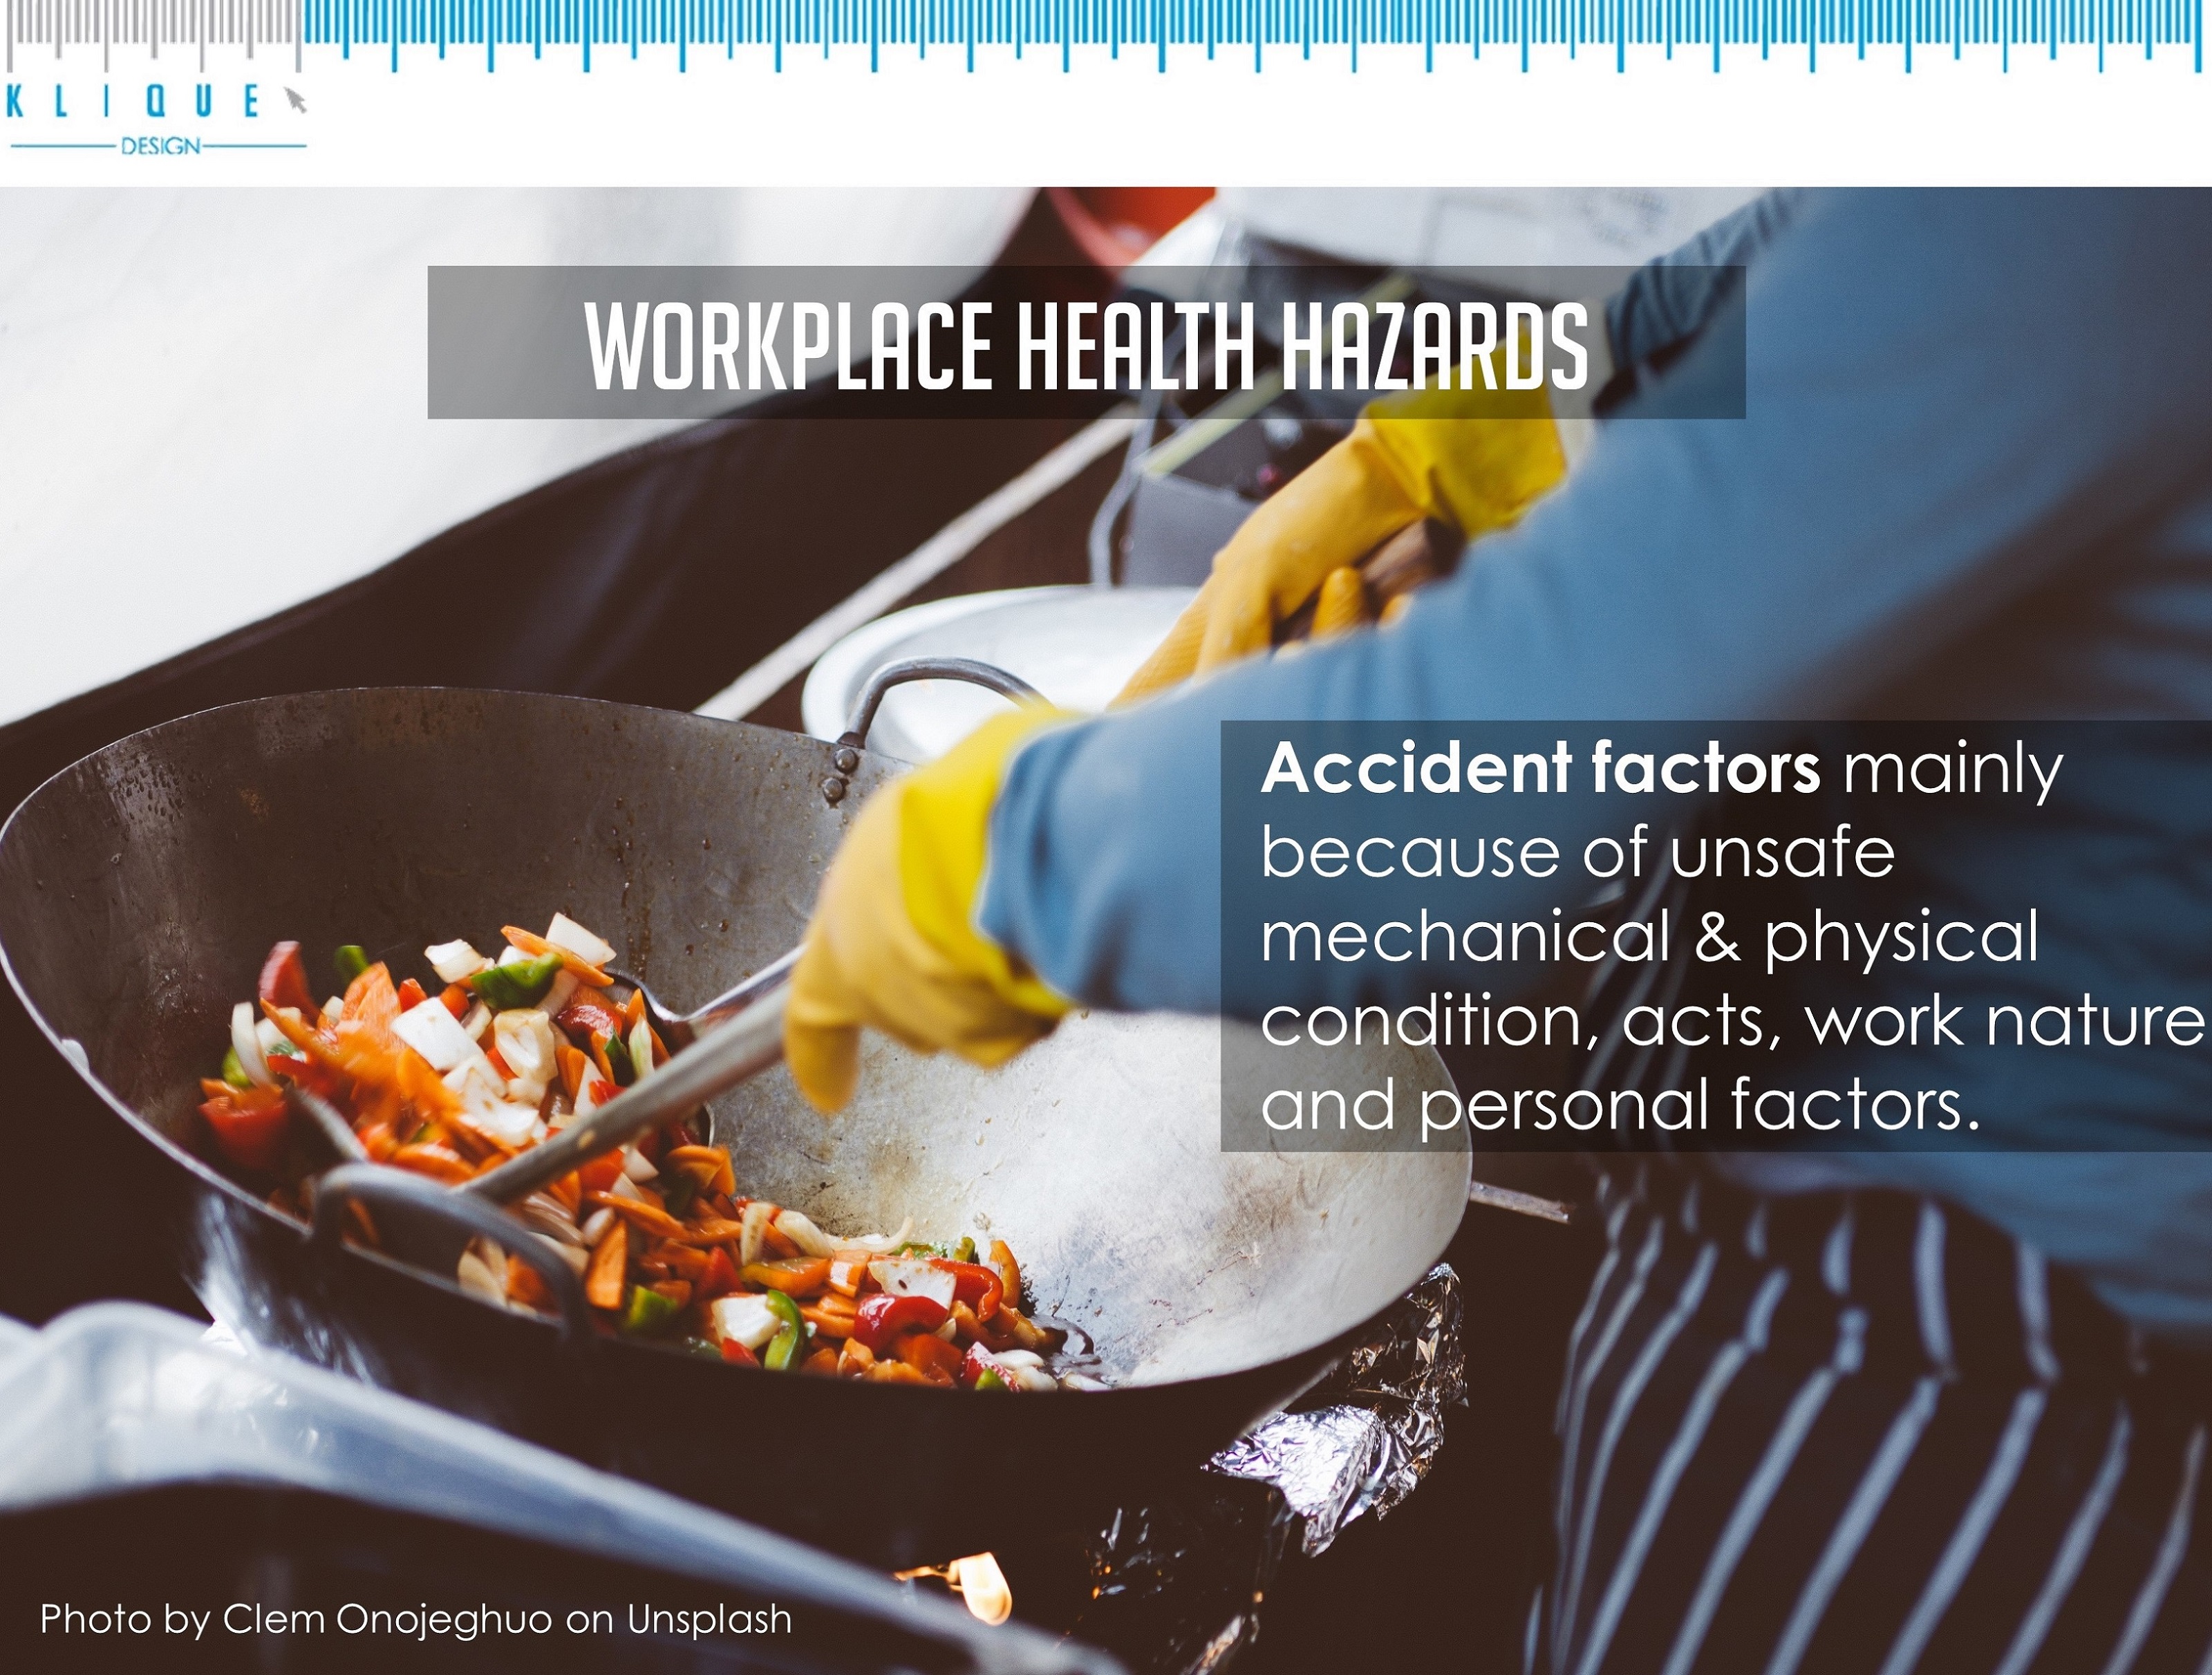 Workplace health hazards - accident factors